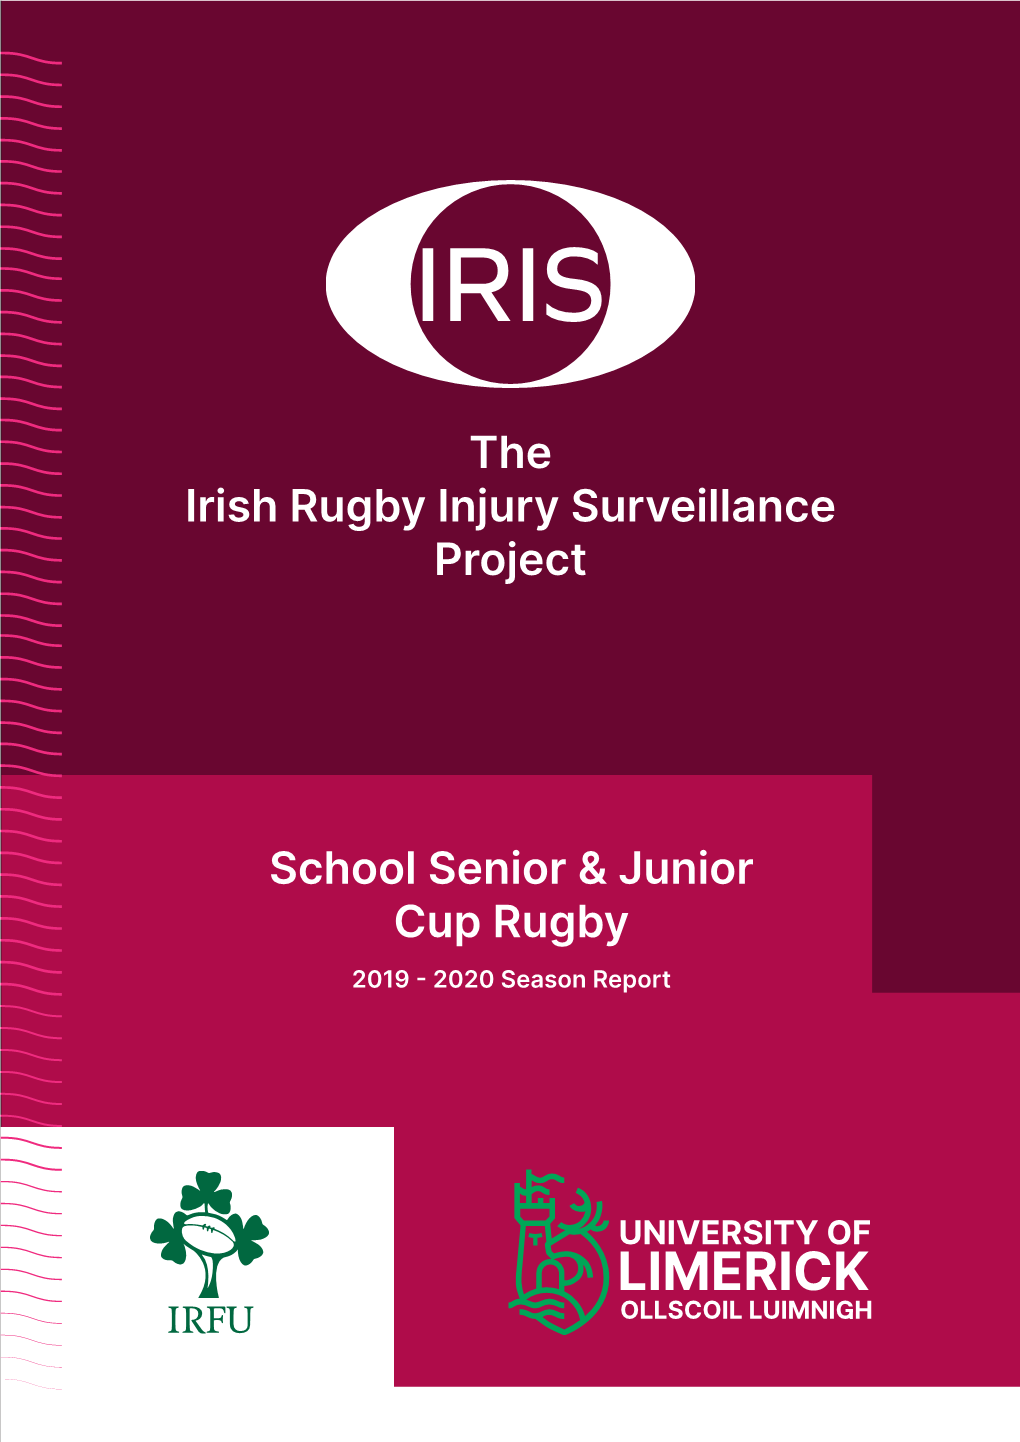 School Senior & Junior Cup Rugby the Irish Rugby Injury Surveillance Project